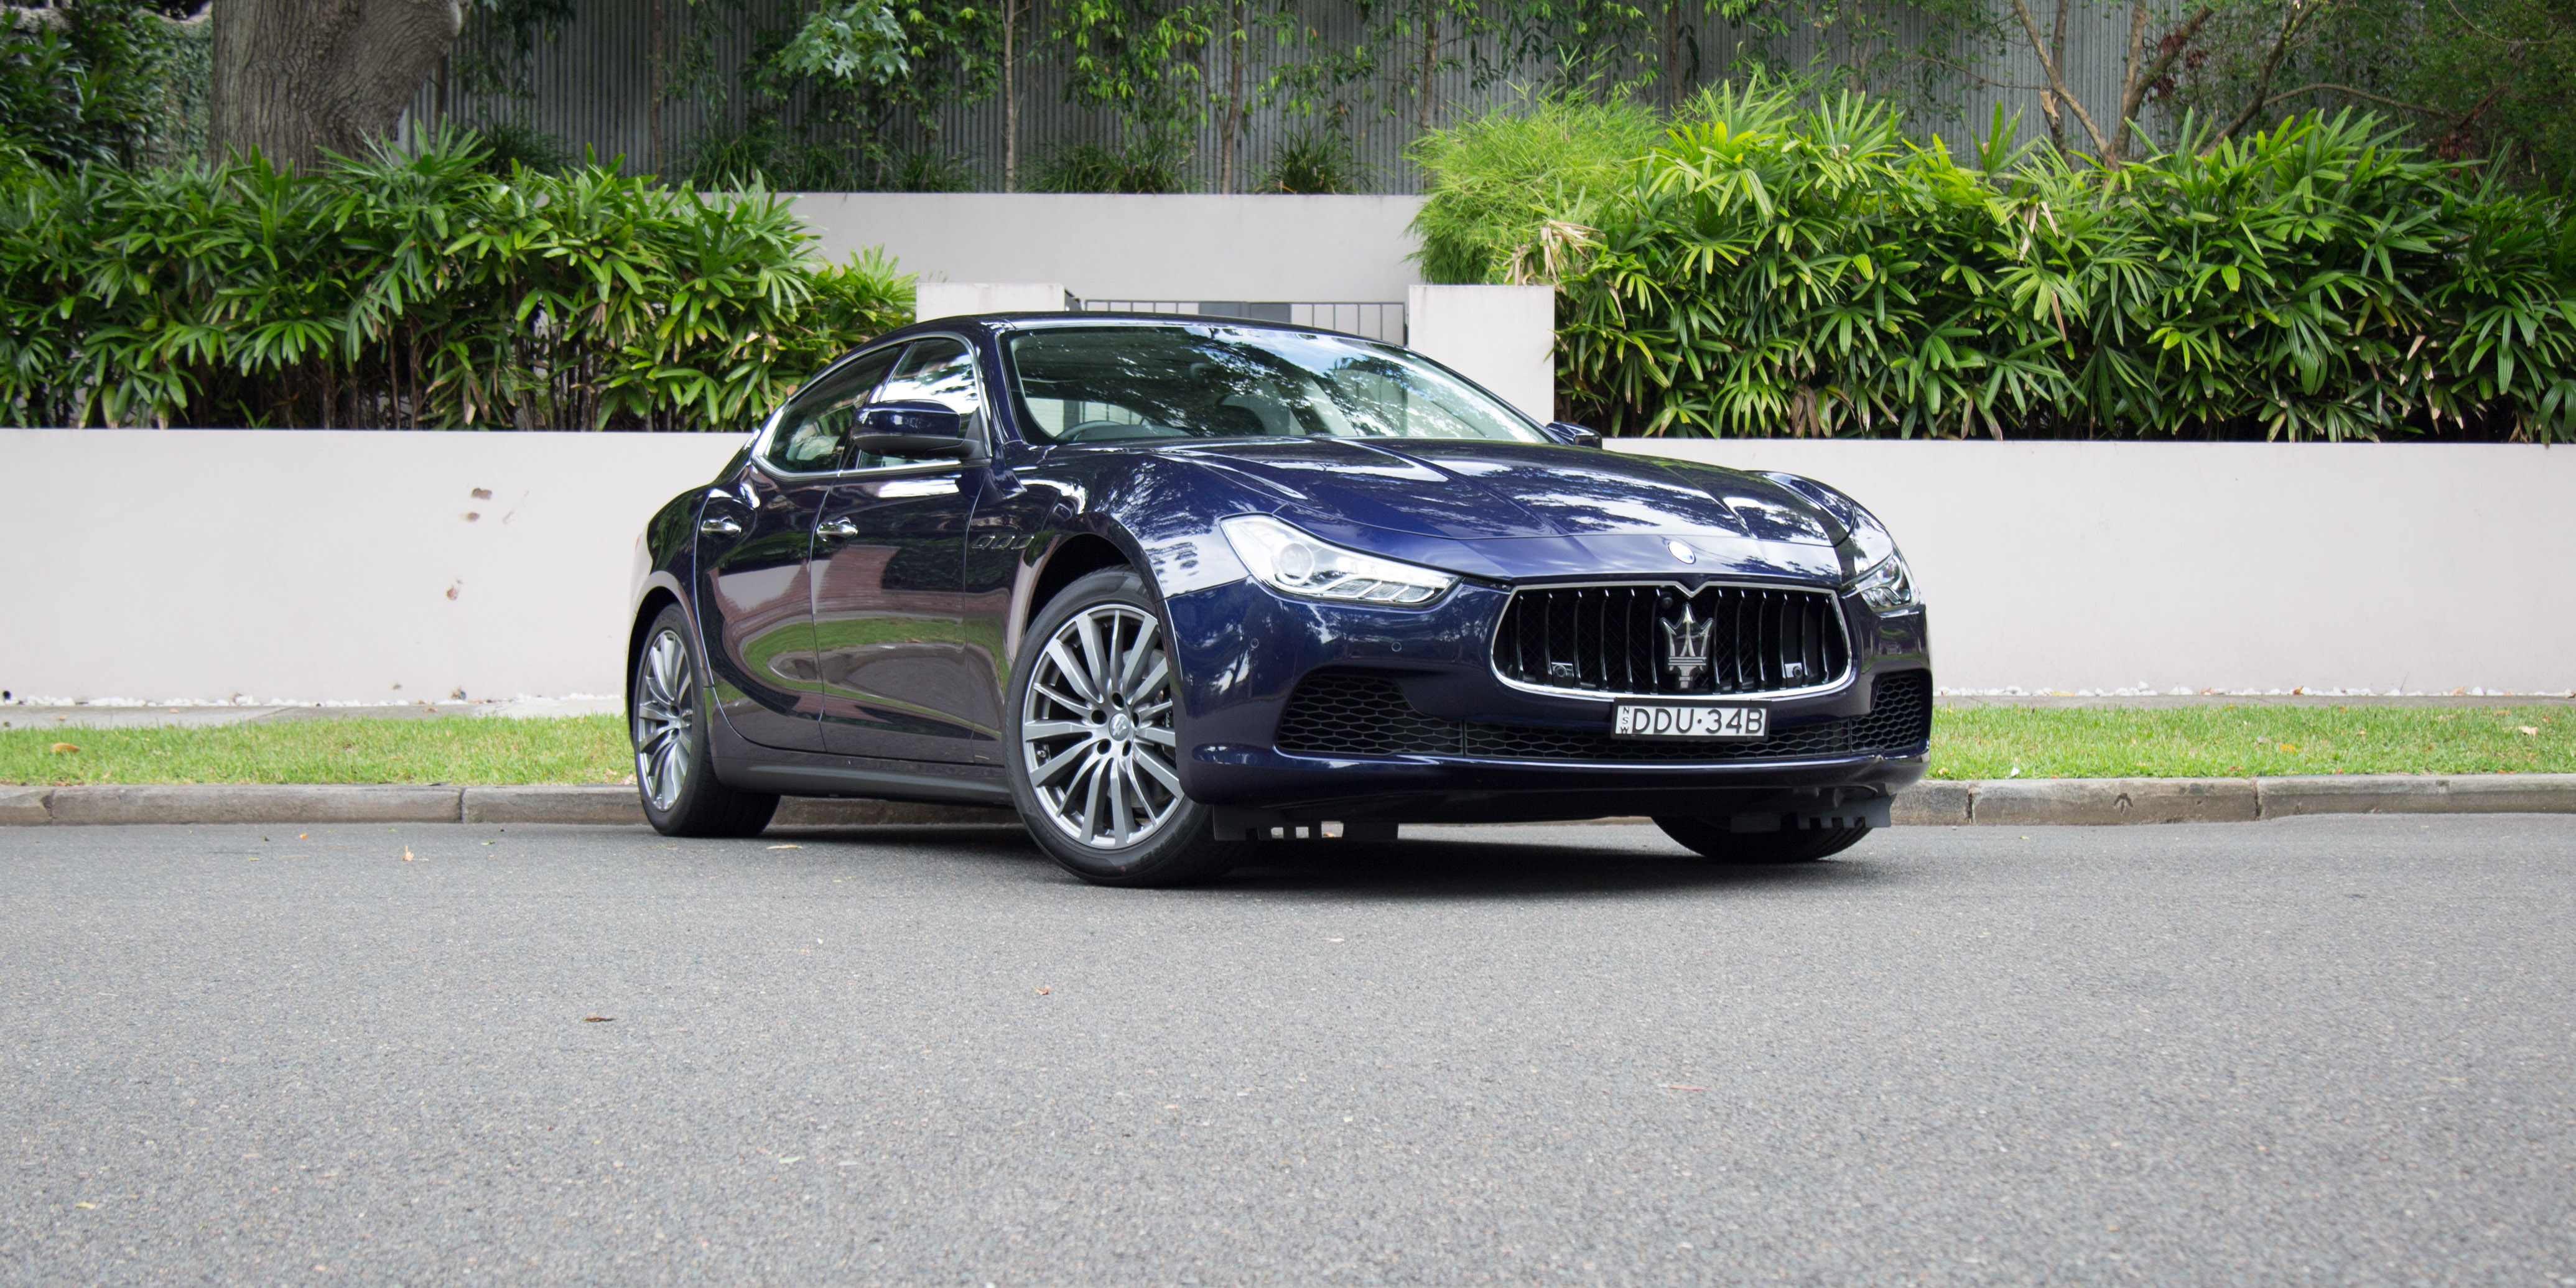 Maserati Ghibli modern big